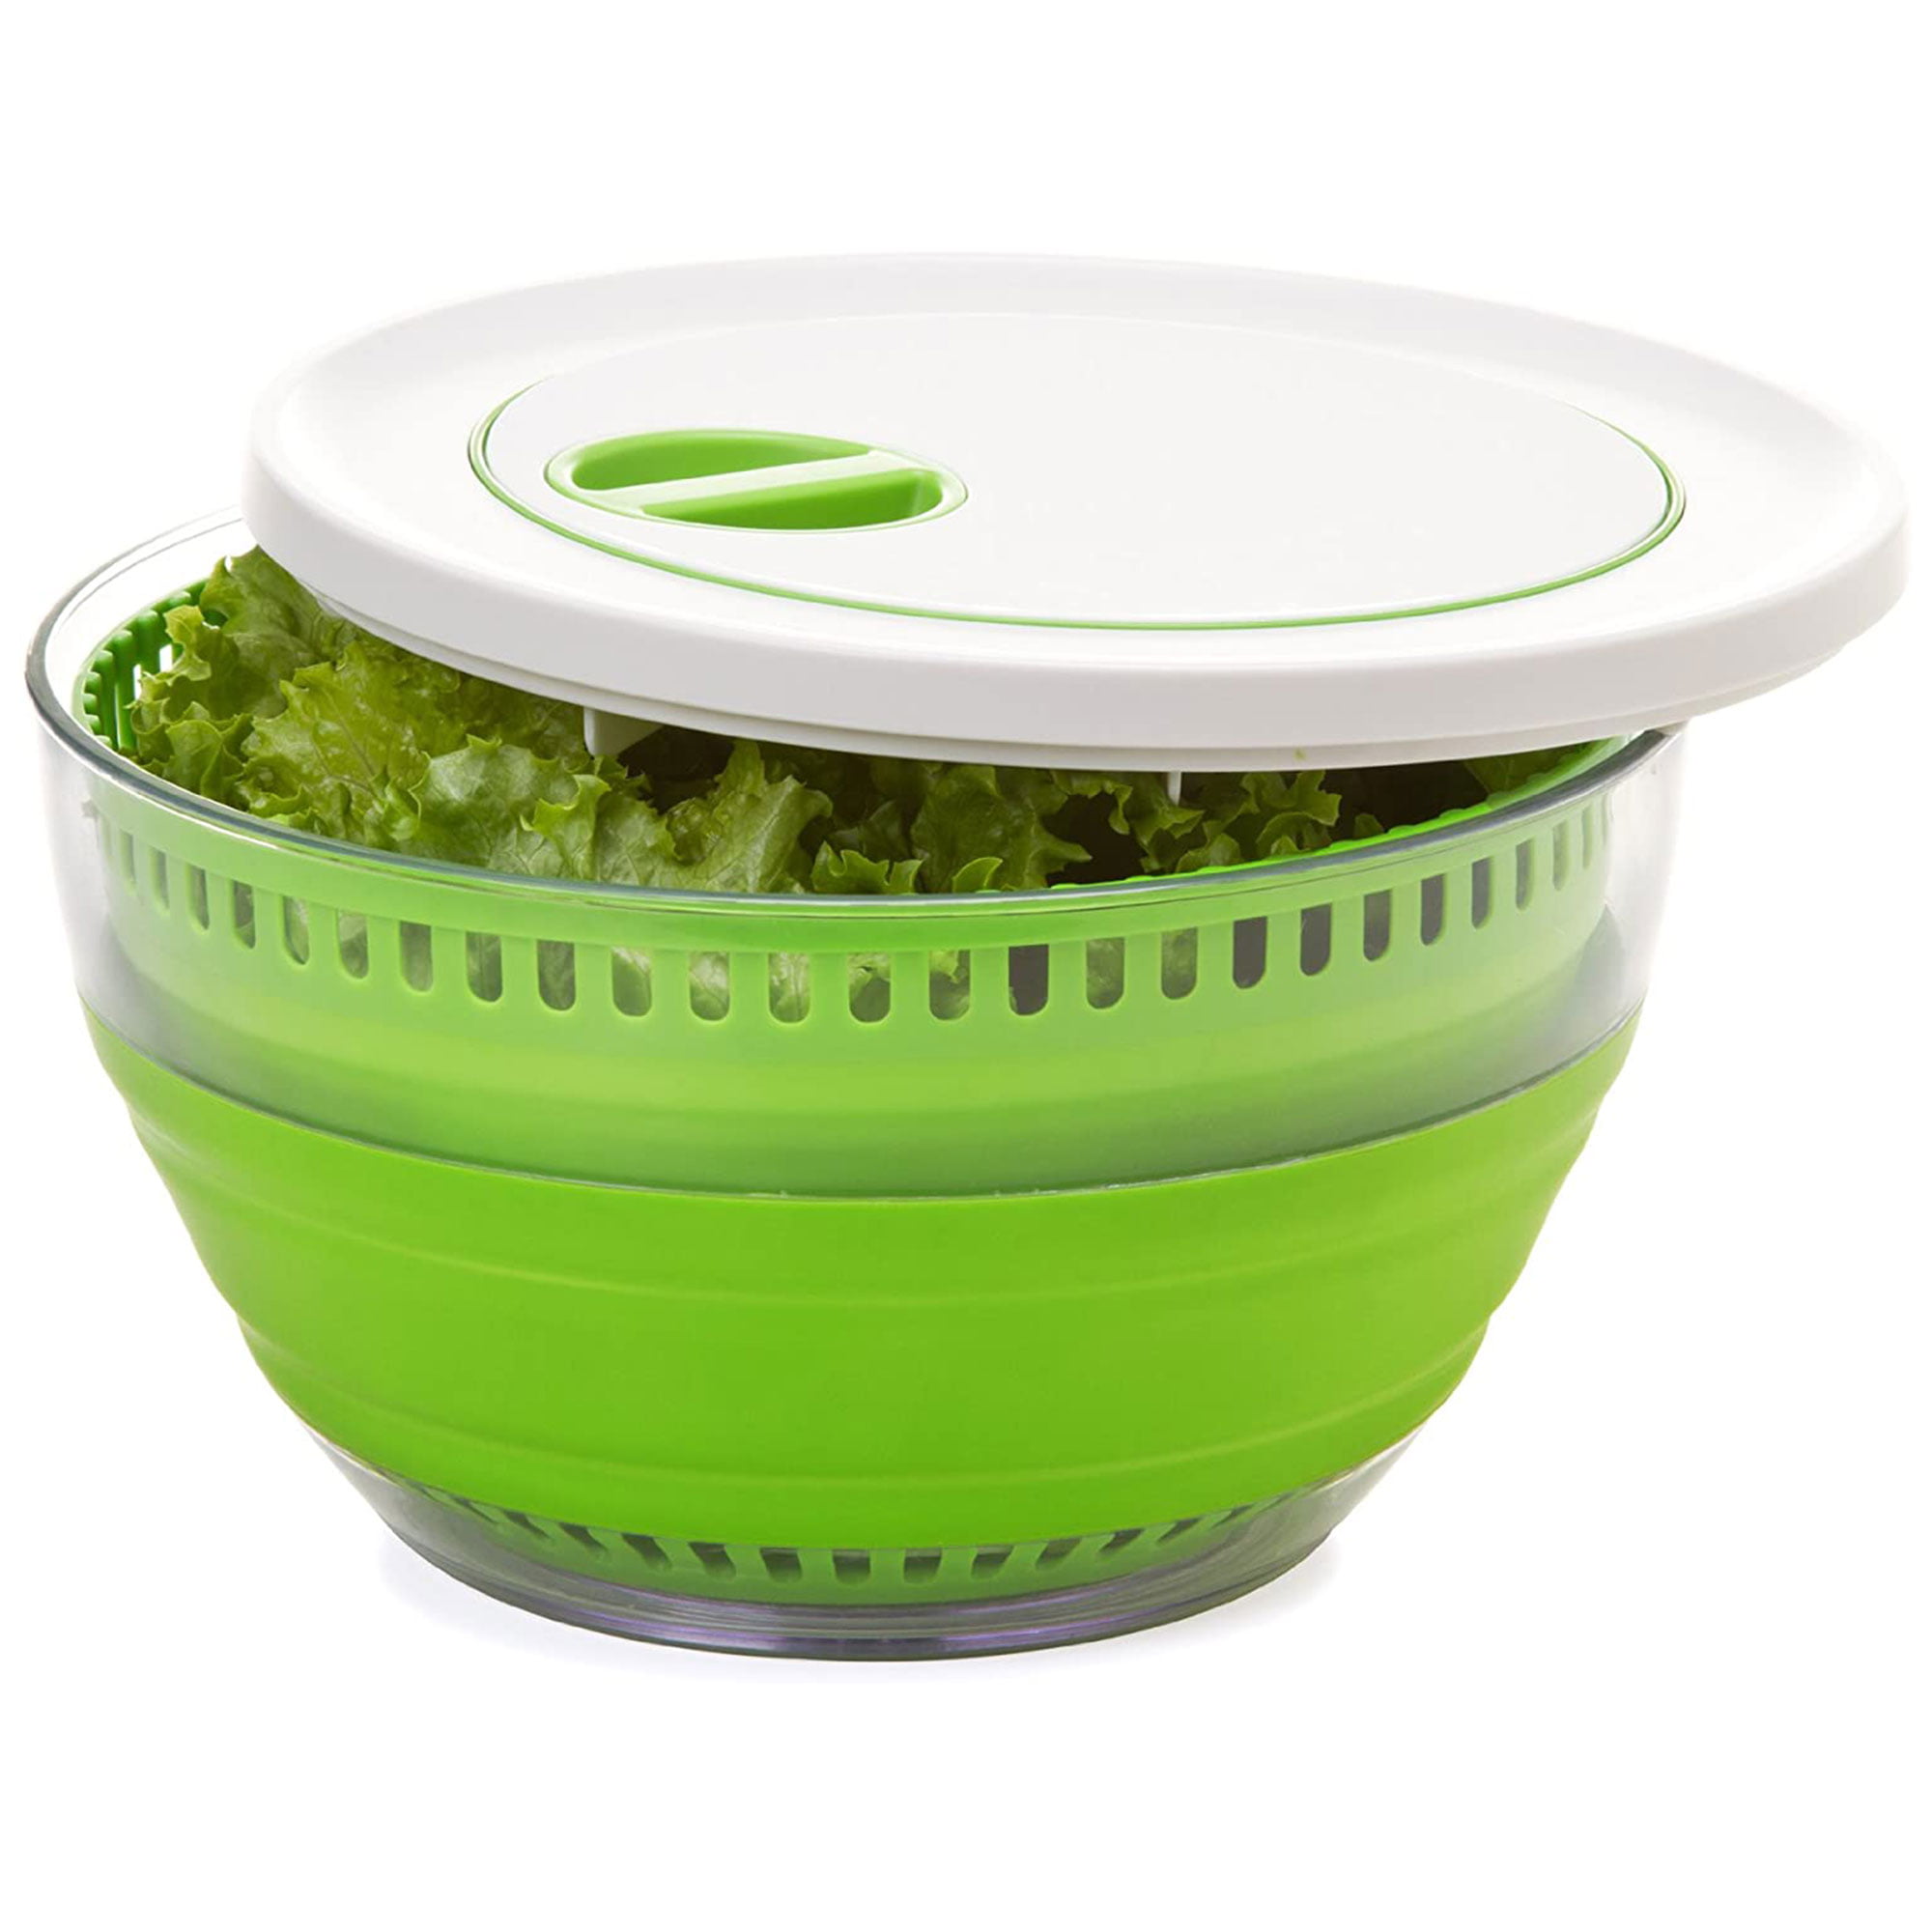 Prepworks Prepworks CSS-2 Collapsible Salad Spinner - 3 Quart, Green CSS-2